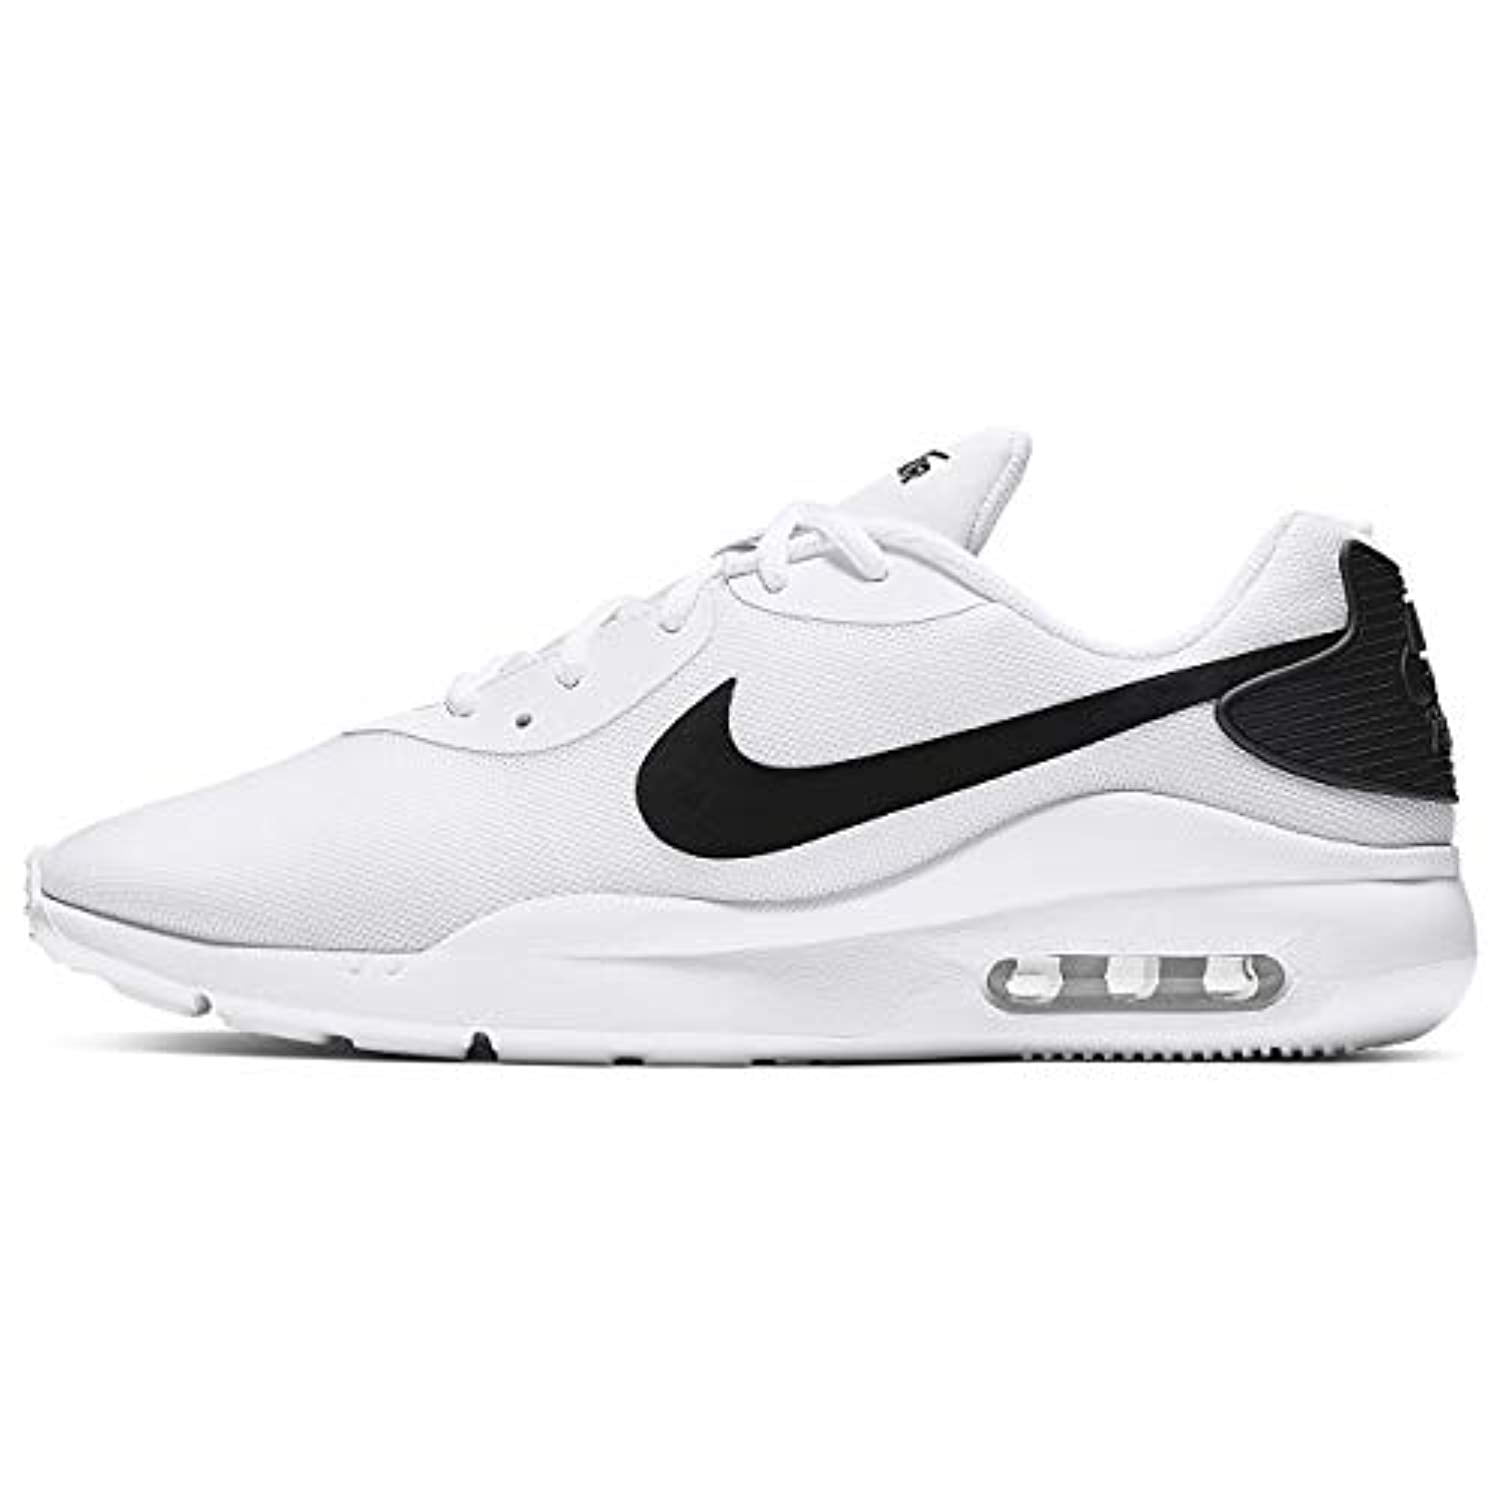 Nike Max Oketo Sneaker, White/Black, 9.5 Regular US - Walmart.com